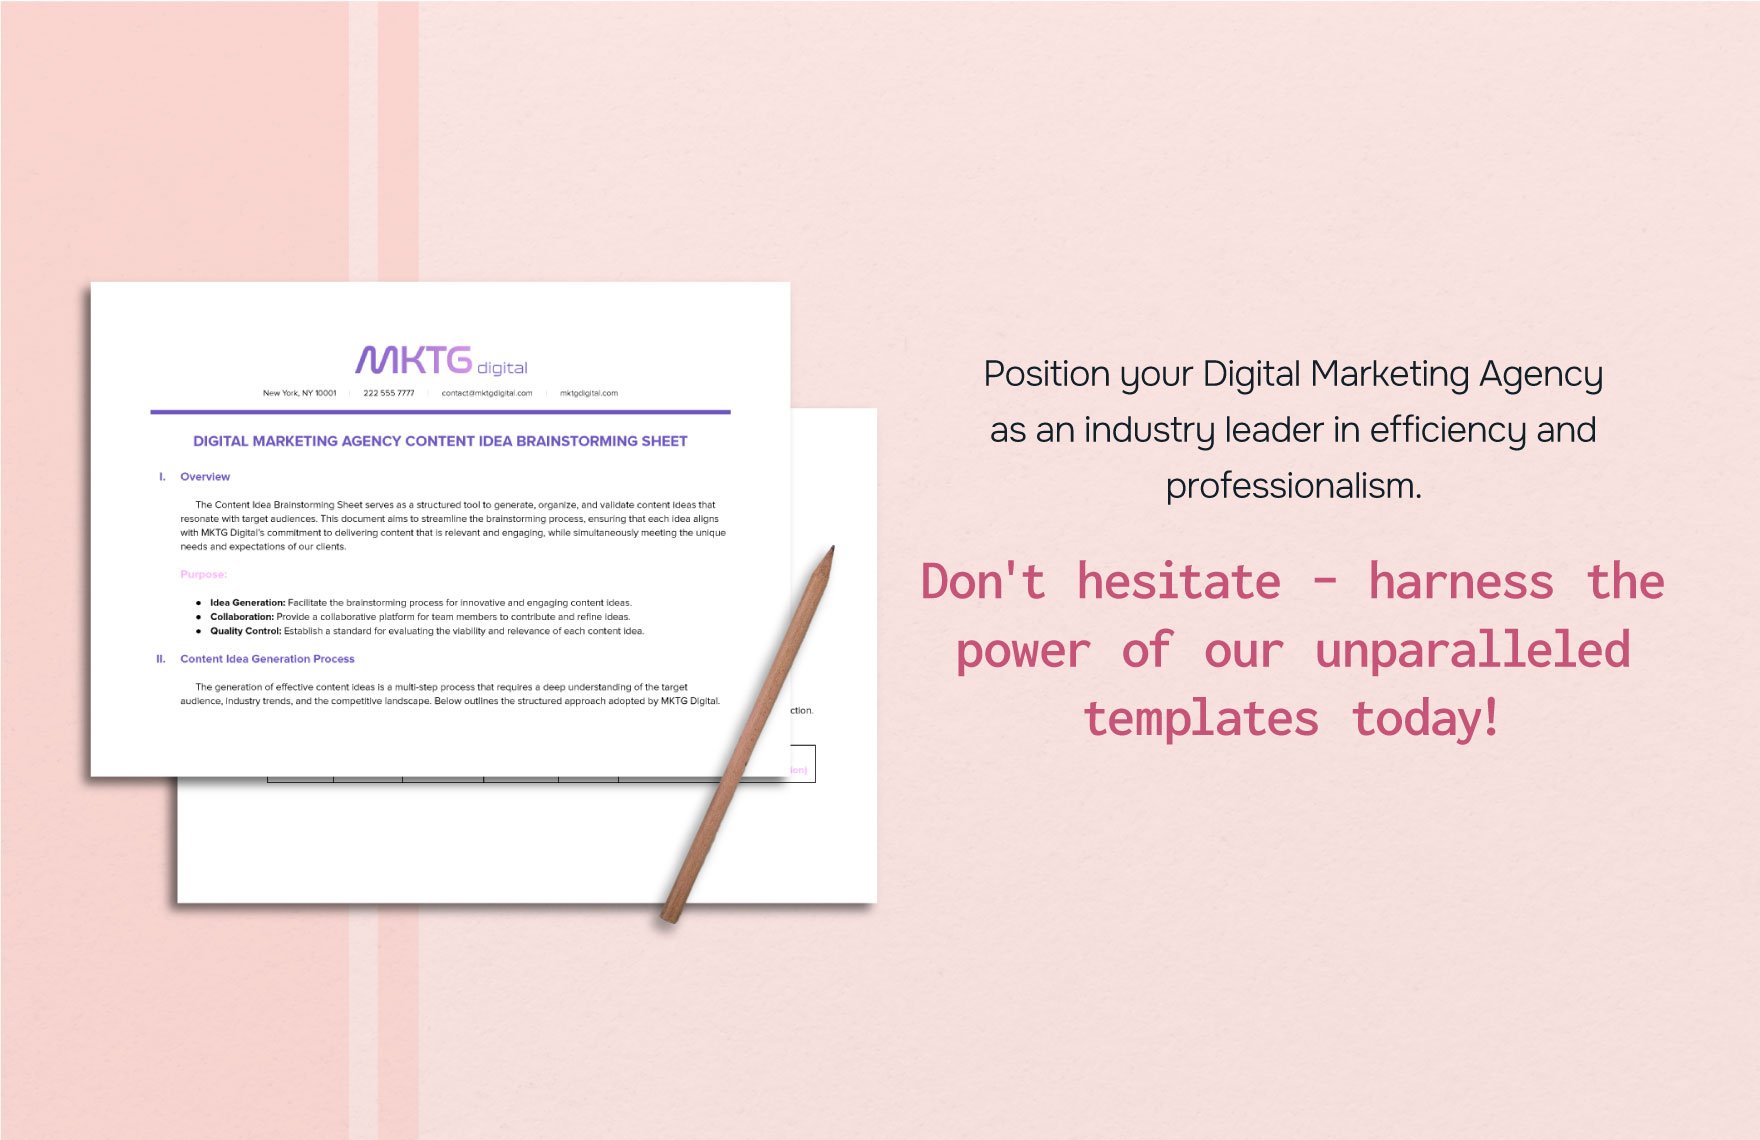 Digital Marketing Agency Content Idea Brainstorming Sheet Template